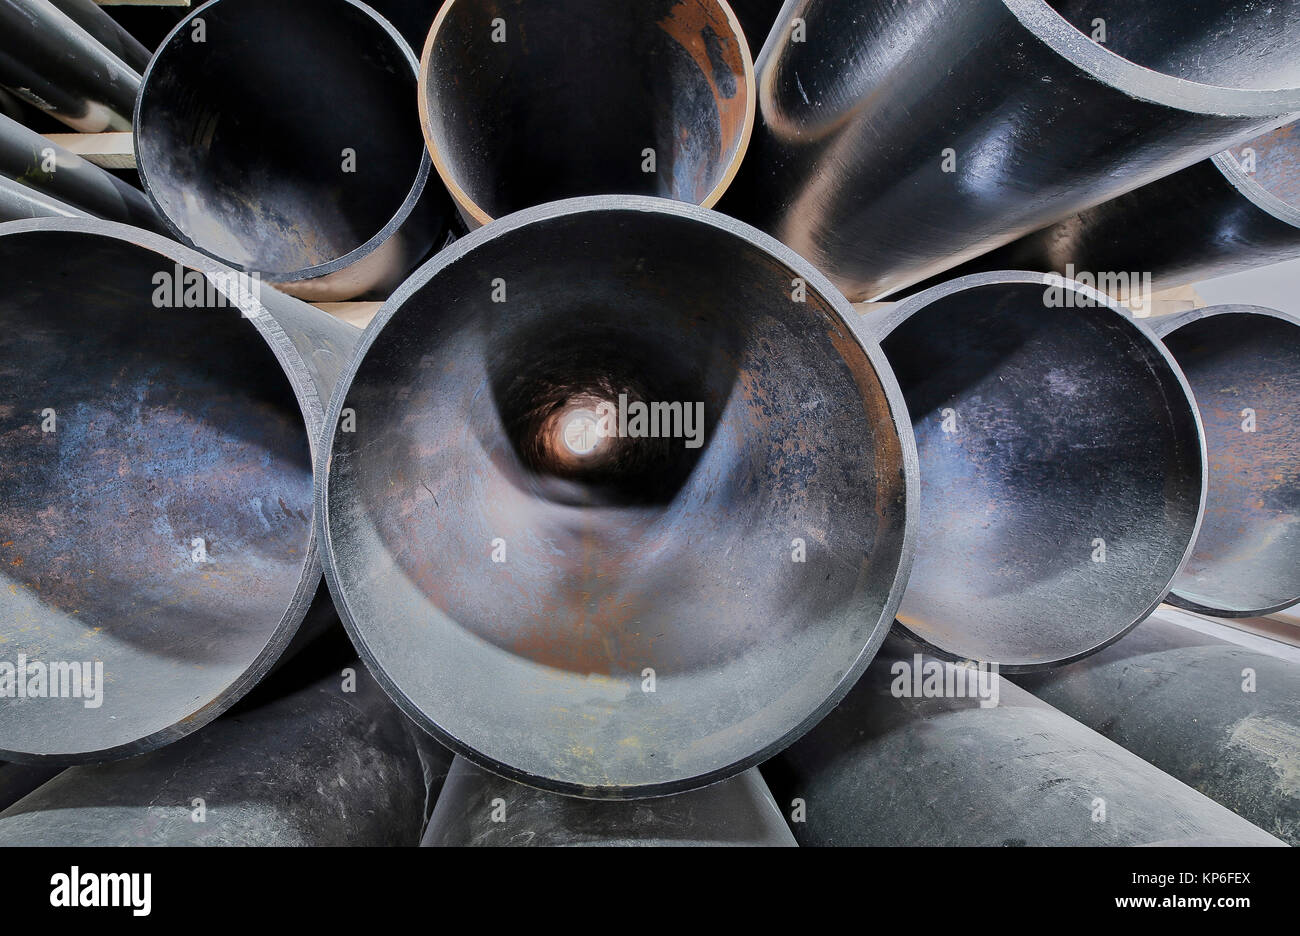 Industriali pesanti tubi in acciaio Foto Stock